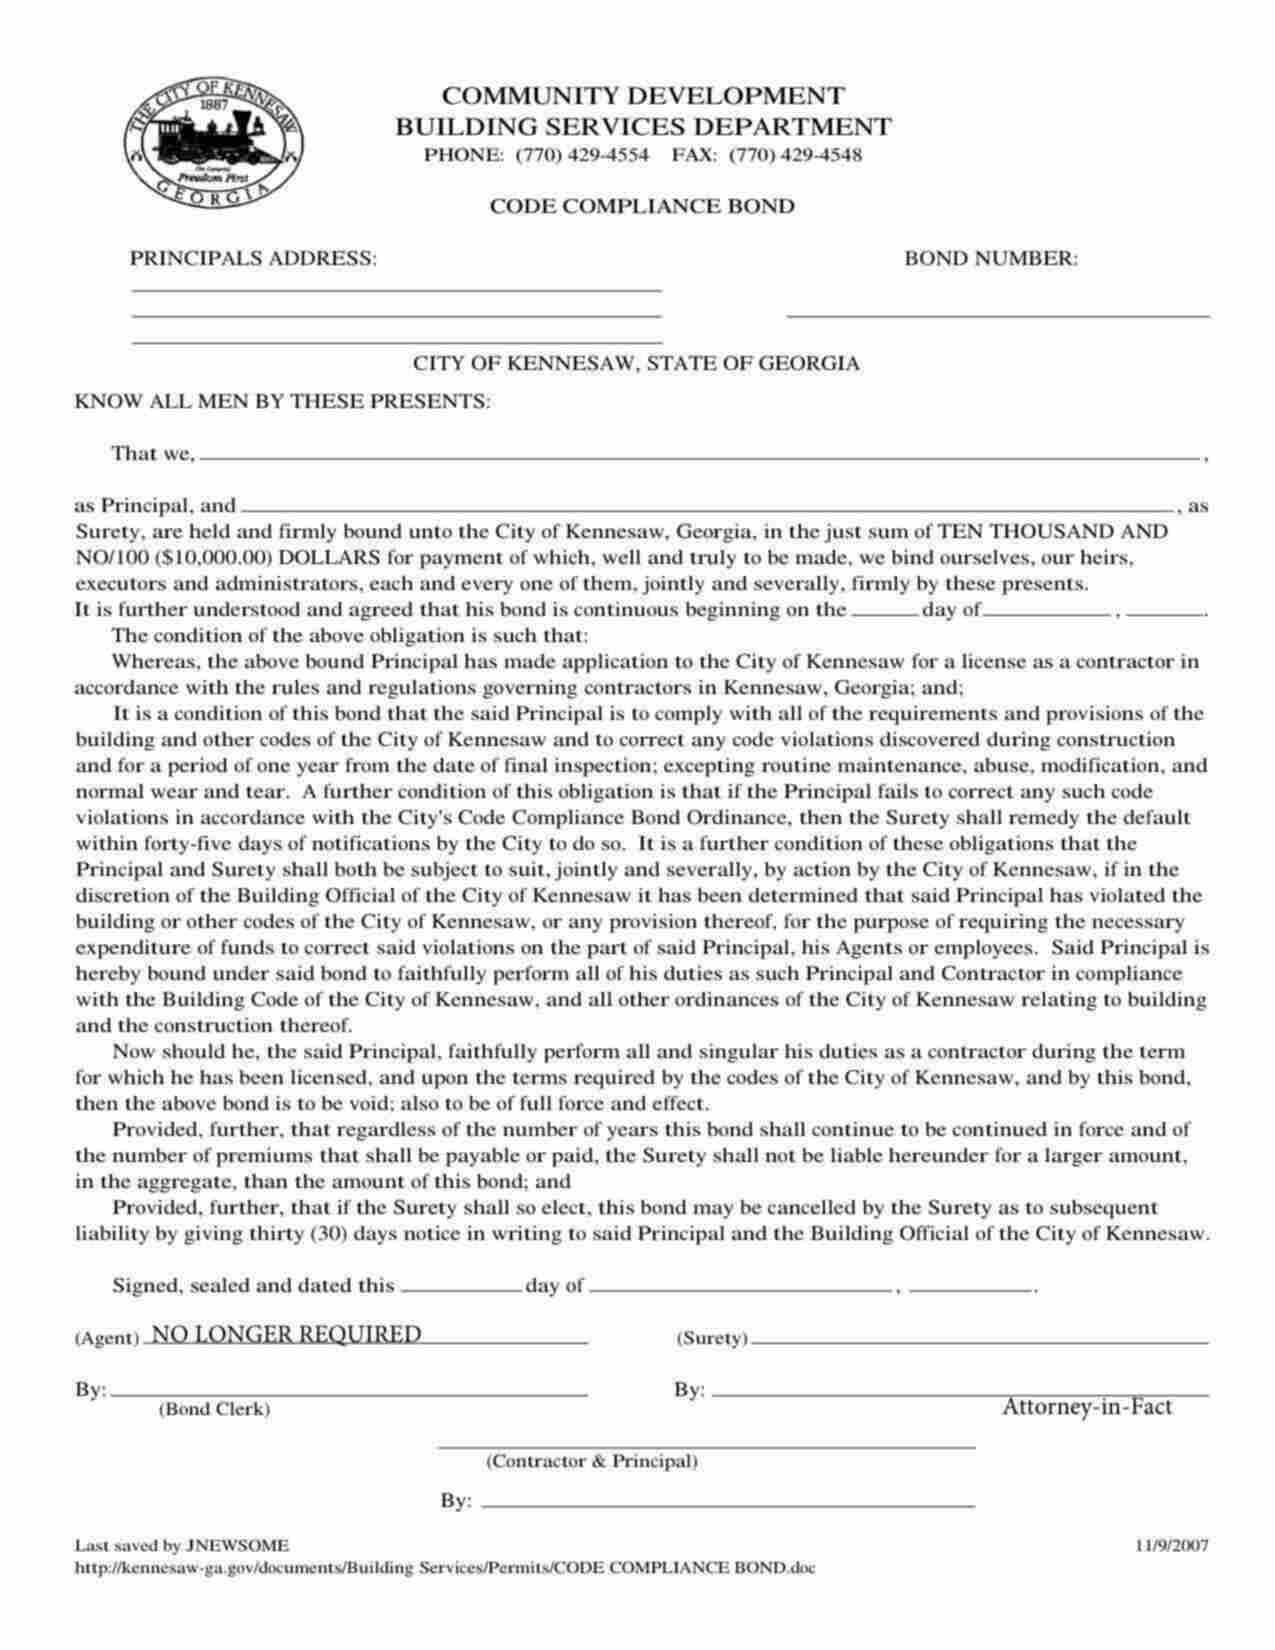 Georgia Contractor's Code Compliance Bond Form